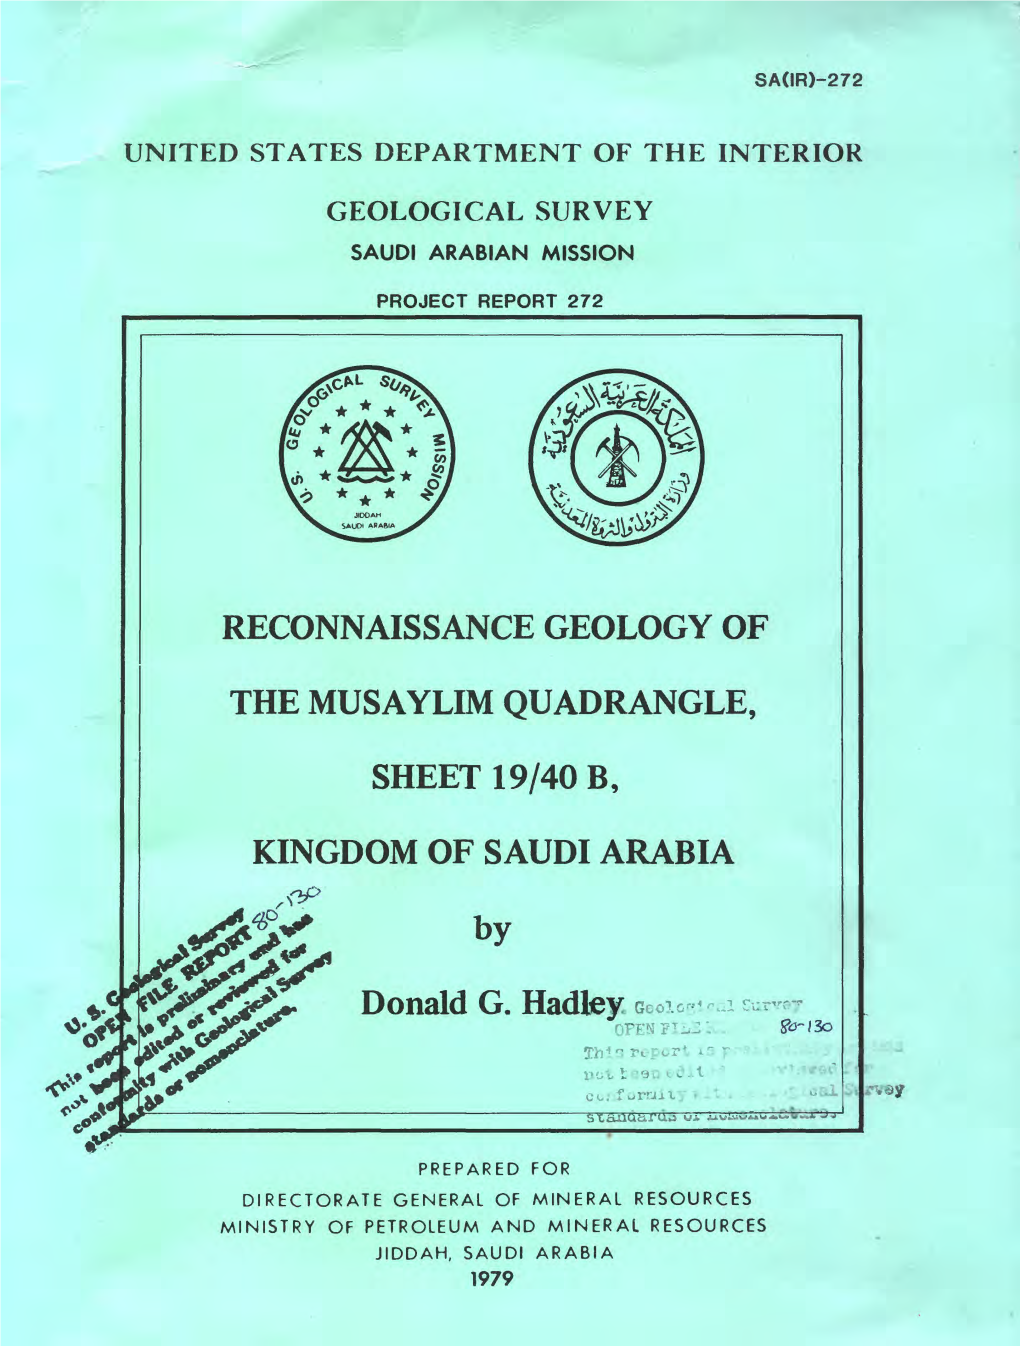 Reconnaissance Geology of the Musaylim Quadrangle